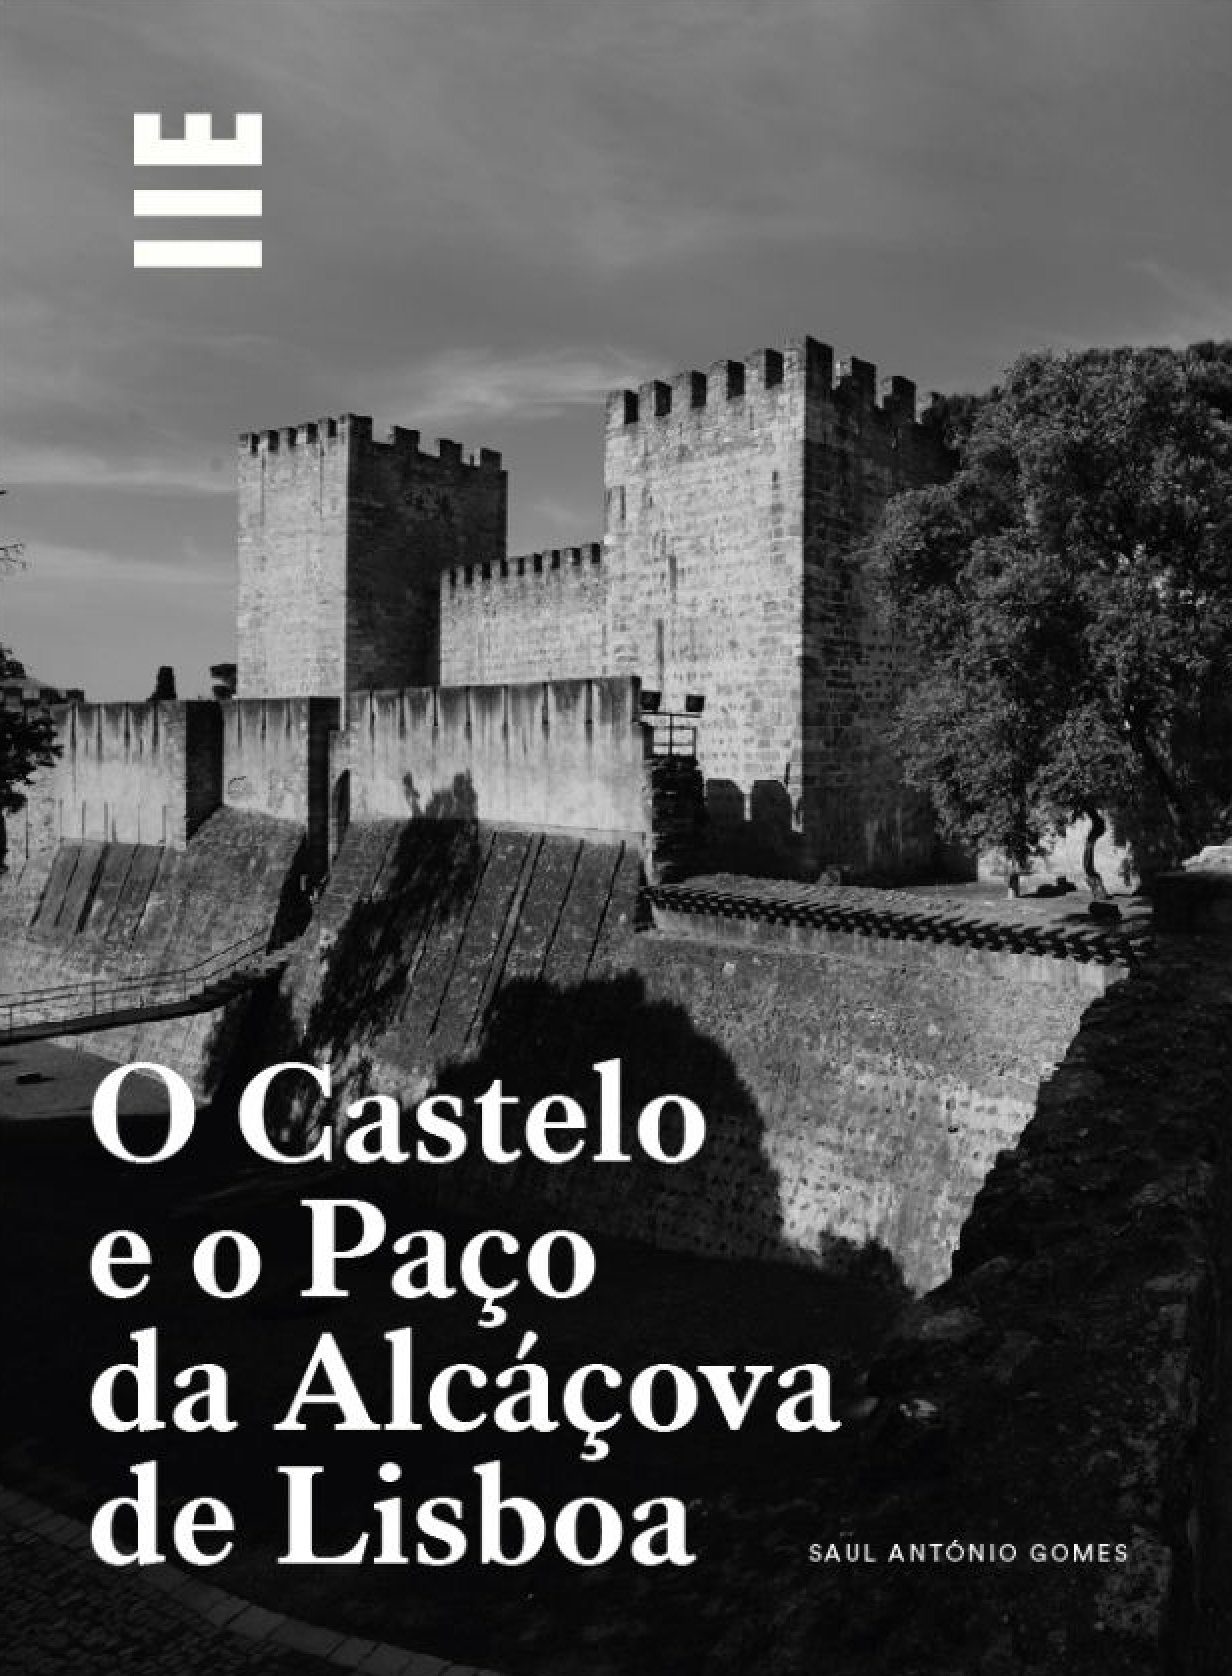 Launch of the book O Castelo e o Paço da Alcáçova de Lisboa, by Saul António Gomes, researcher at the CHSC.